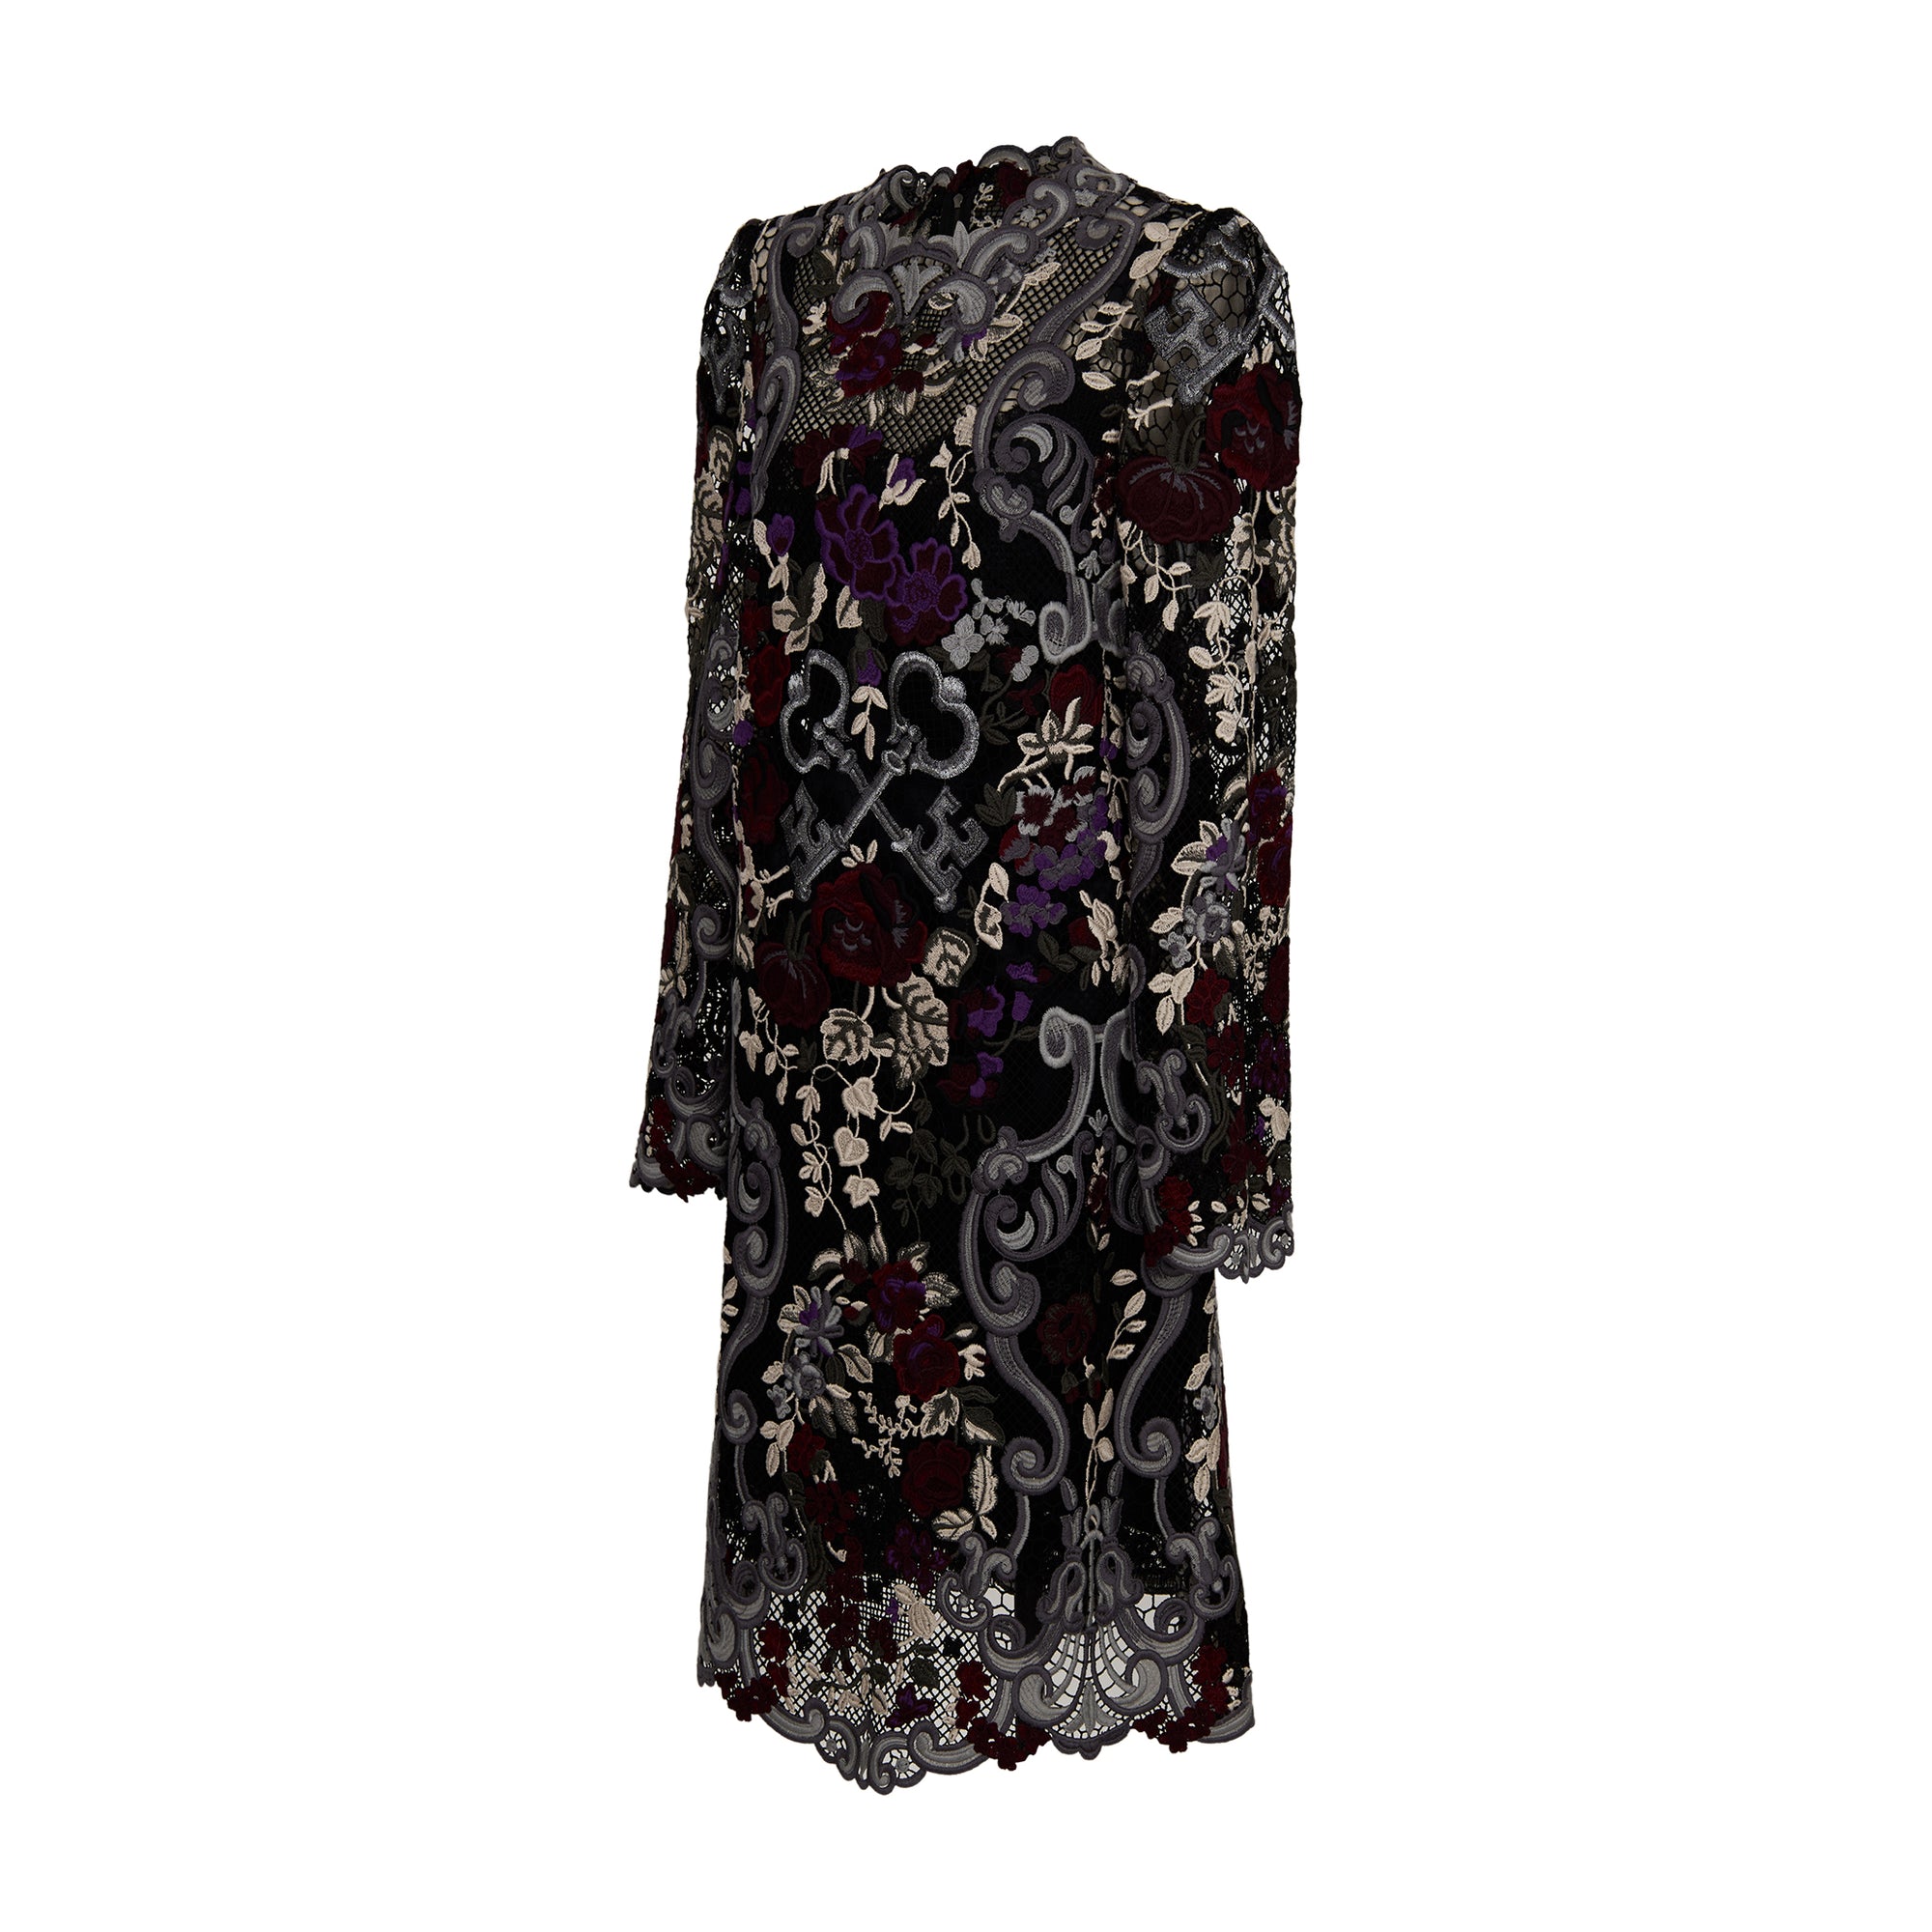 Dolce & Gabbana Black lace dress with key motif